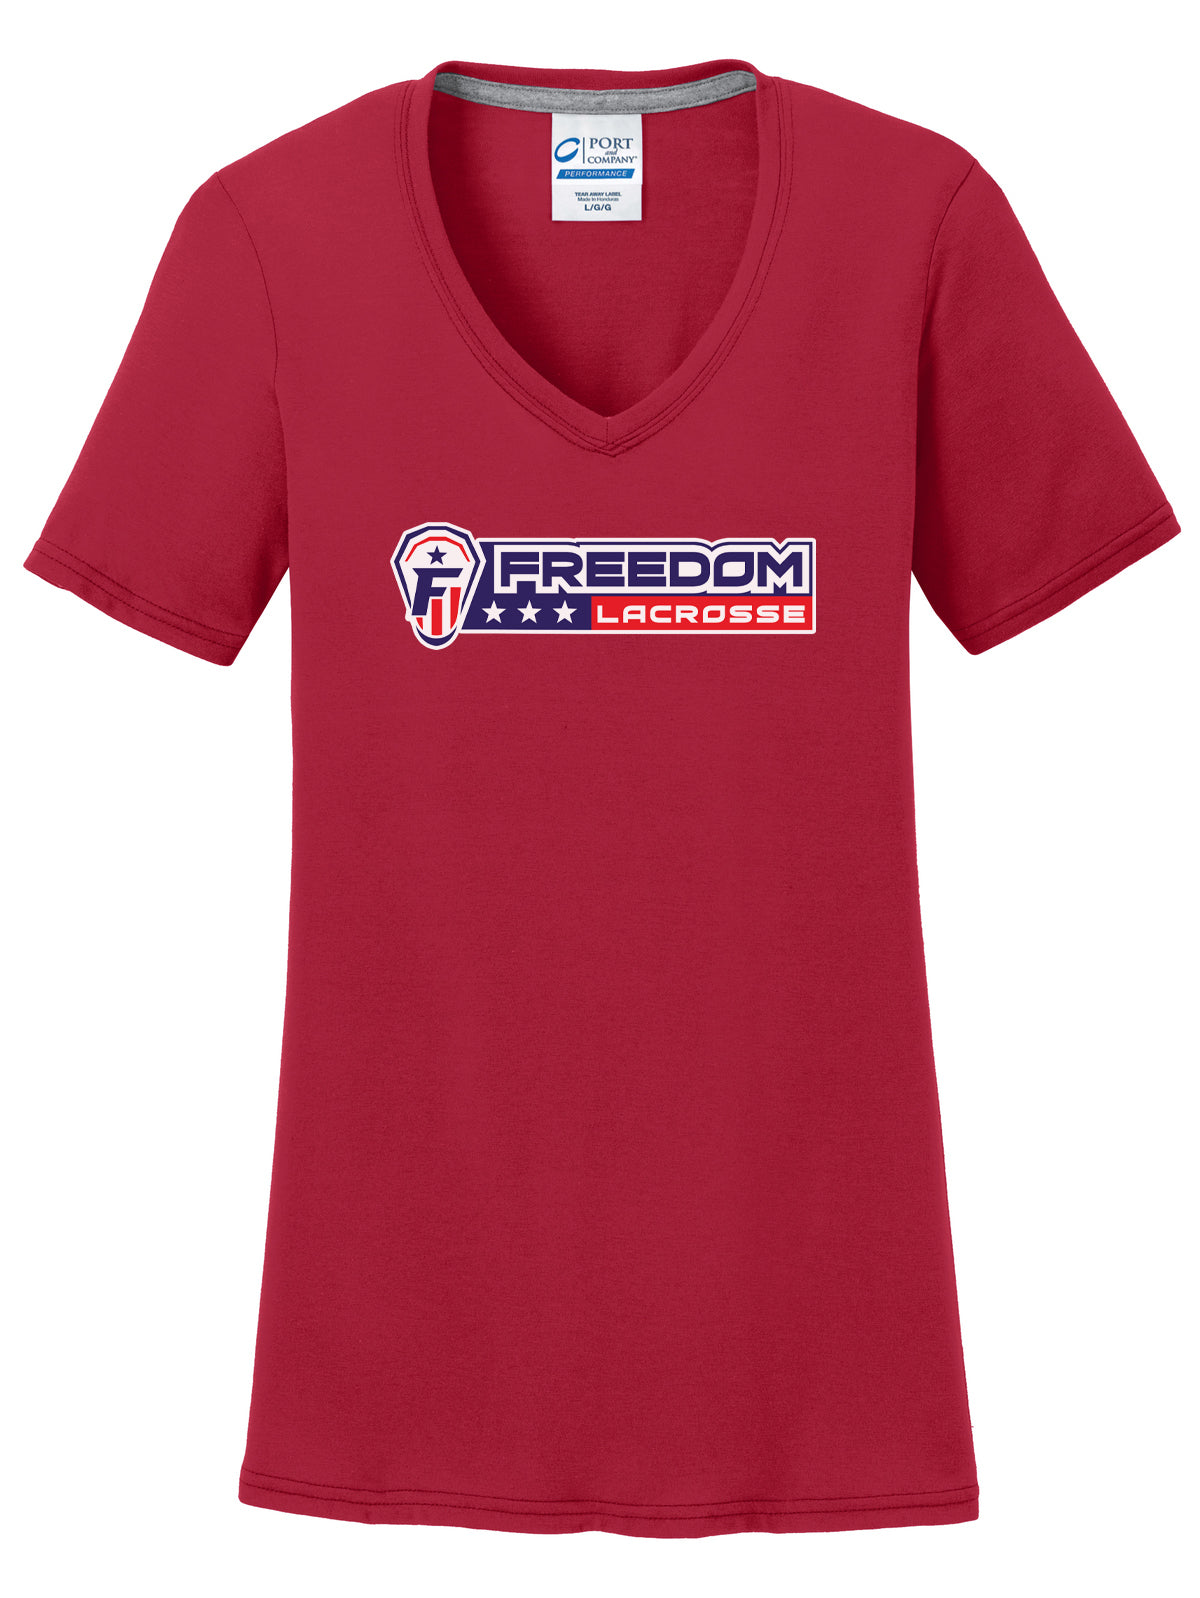 Freedom Lacrosse Women's Red T-Shirt